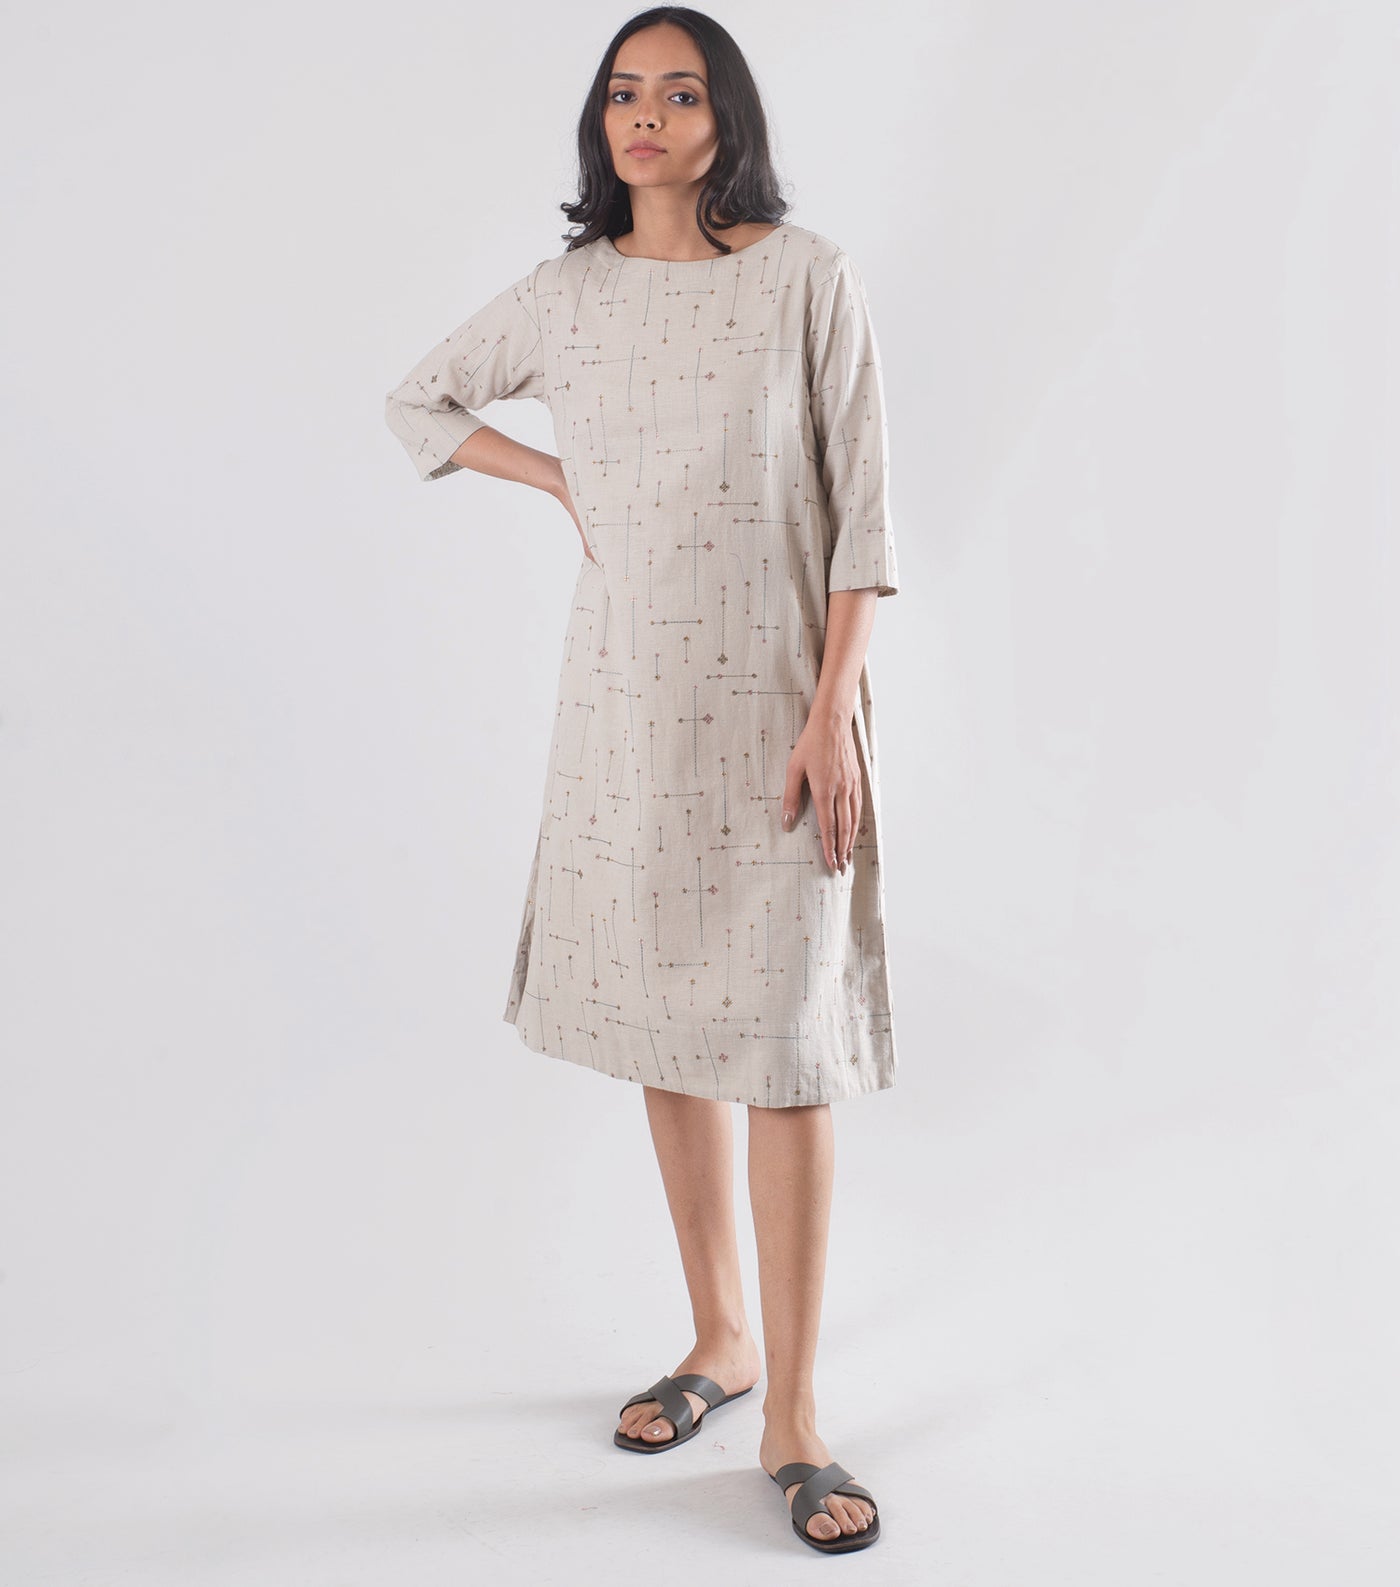 Beige embroidered linen Dress